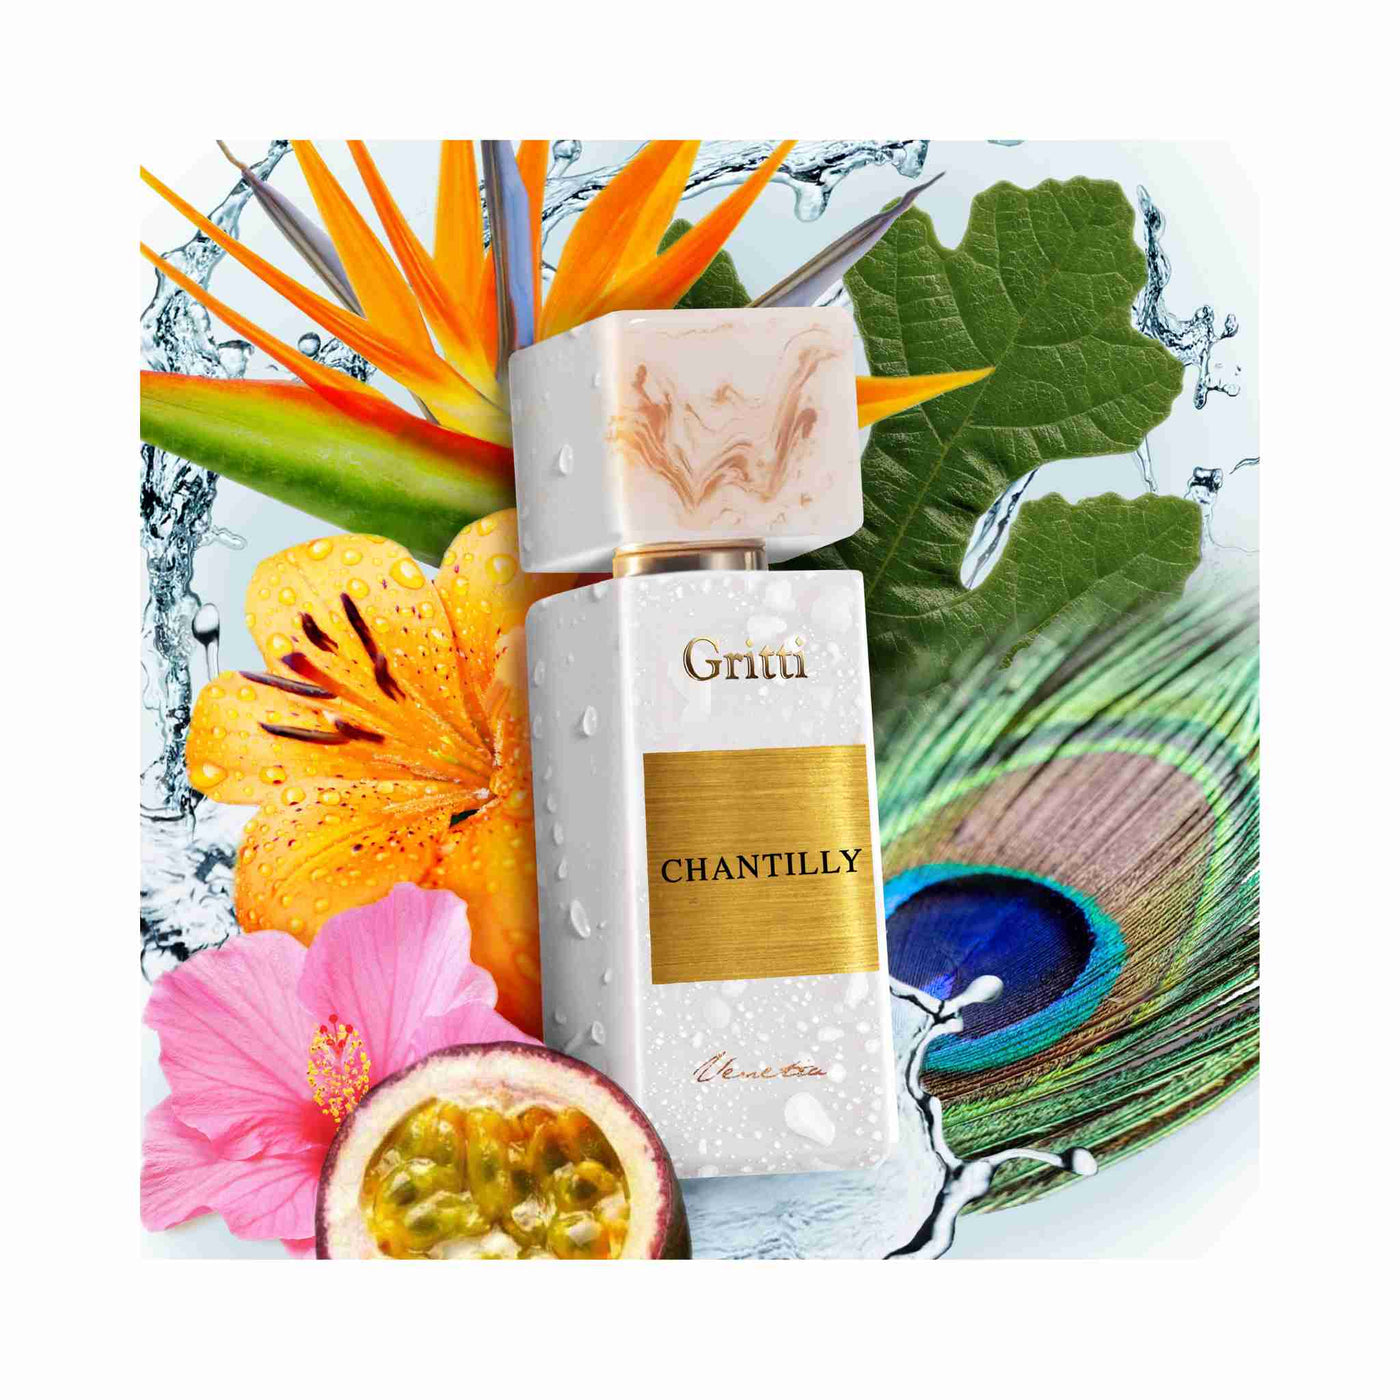 Chantilly Gritti fragrance